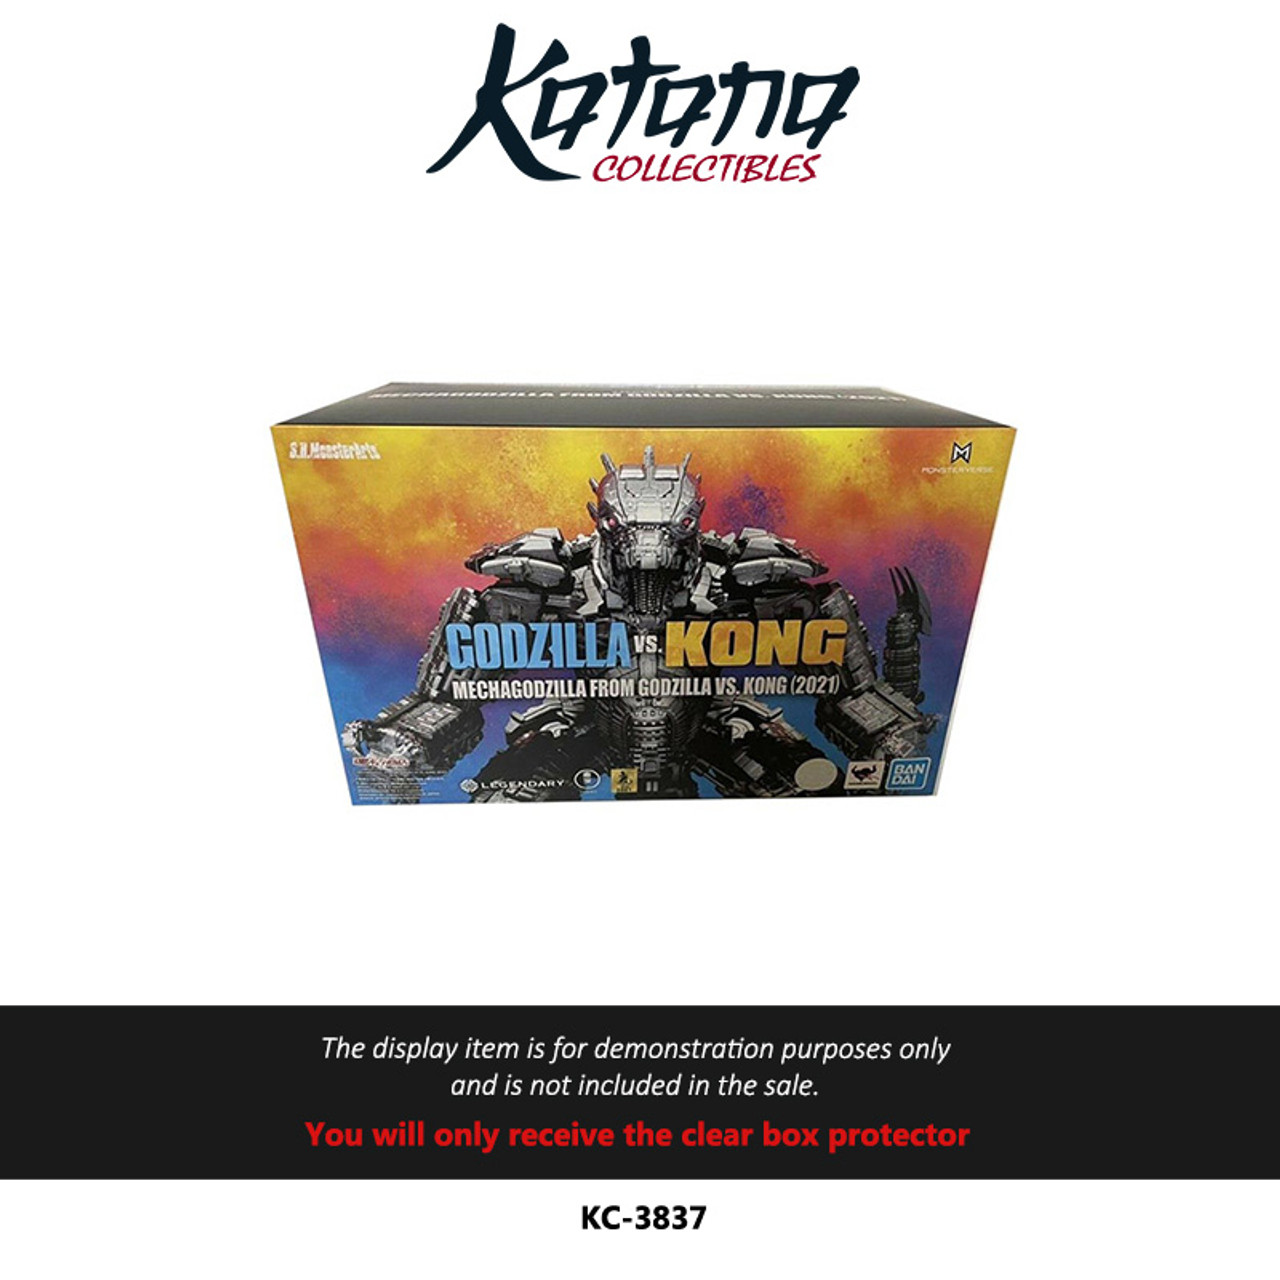 Katana Collectibles Protector For MechaGodzilla Box